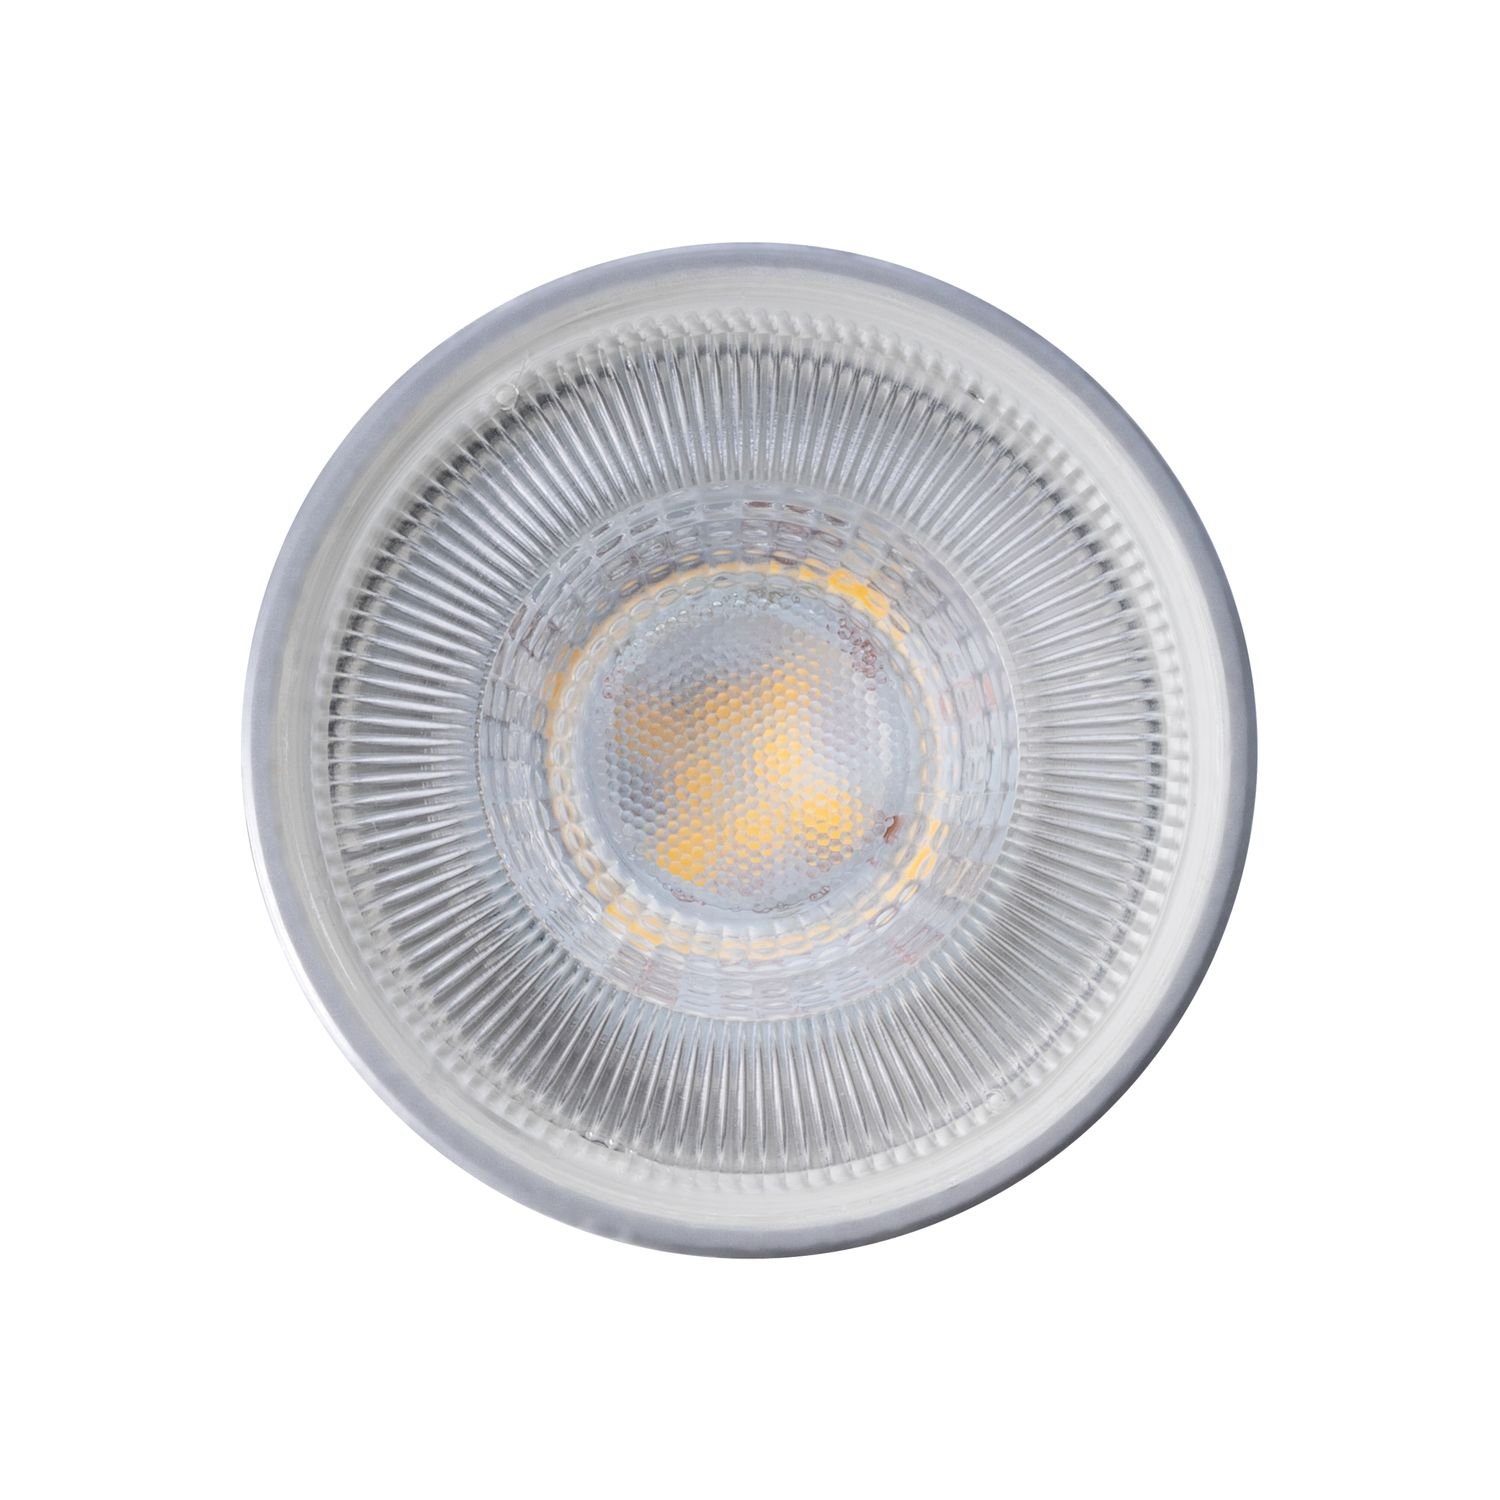 LEDANDO LED Einbaustrahler Chrom 10er IP44 von Markenstrahler LED Einbaustrahler LED mit Set GU10